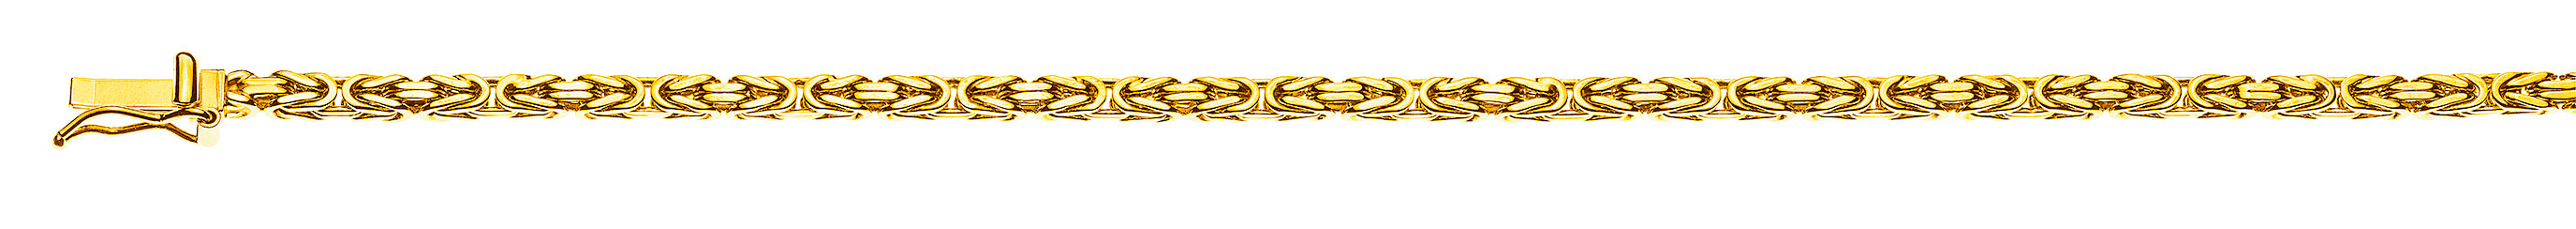 AURONOS Prestige Necklace Yellow Gold 18K King Chain 55cm 2.5mm